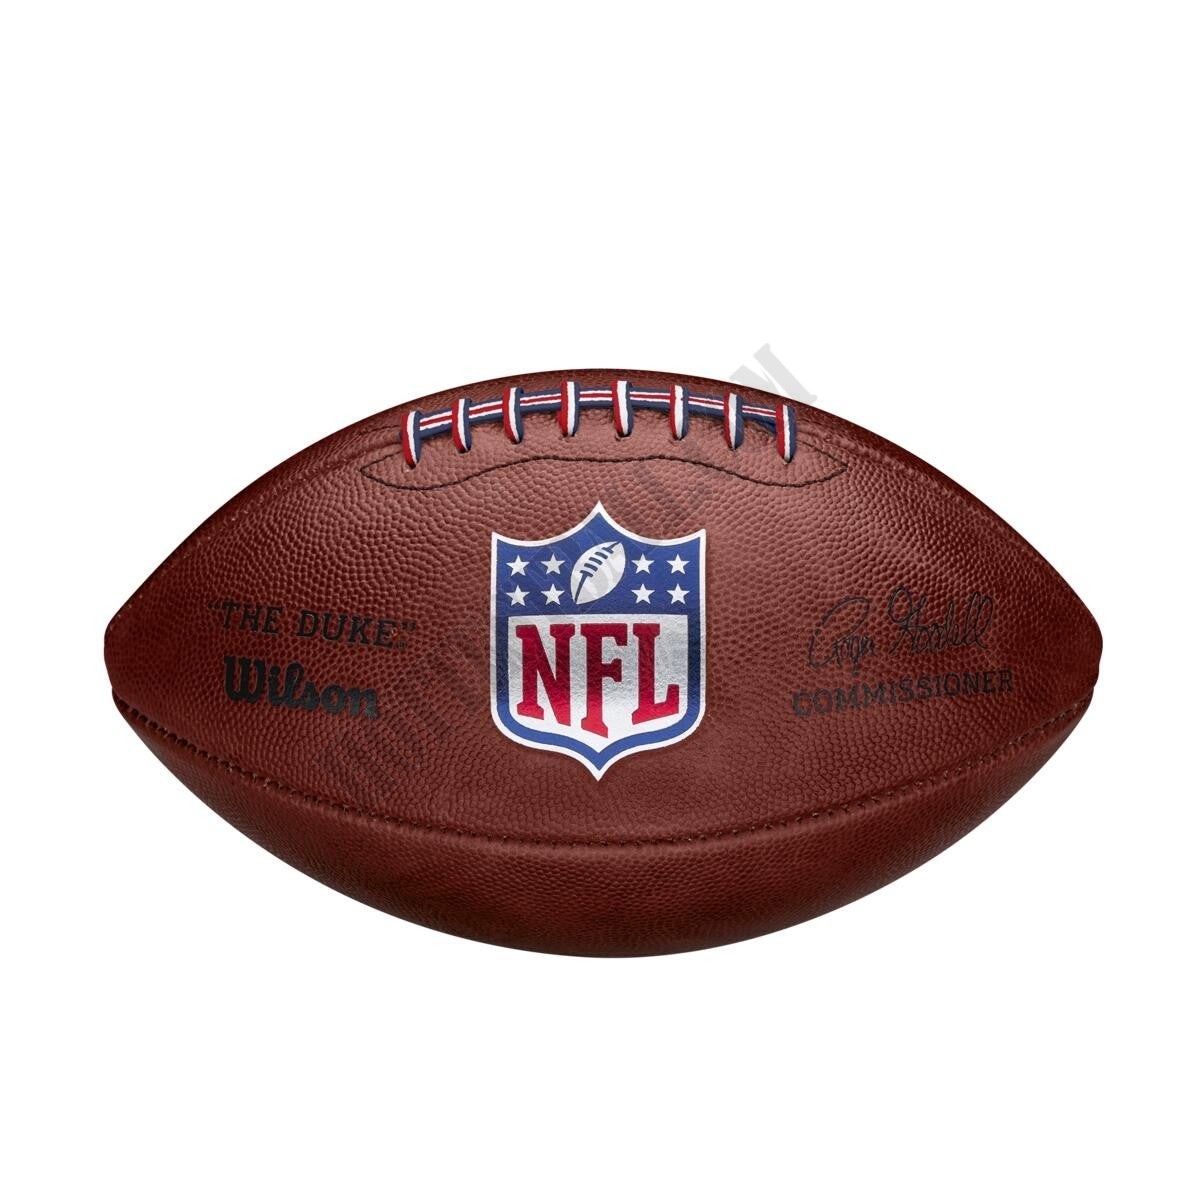 The Duke NFL Football Limited Edition - Wilson Discount Store - The Duke NFL Football Limited Edition - Wilson Discount Store